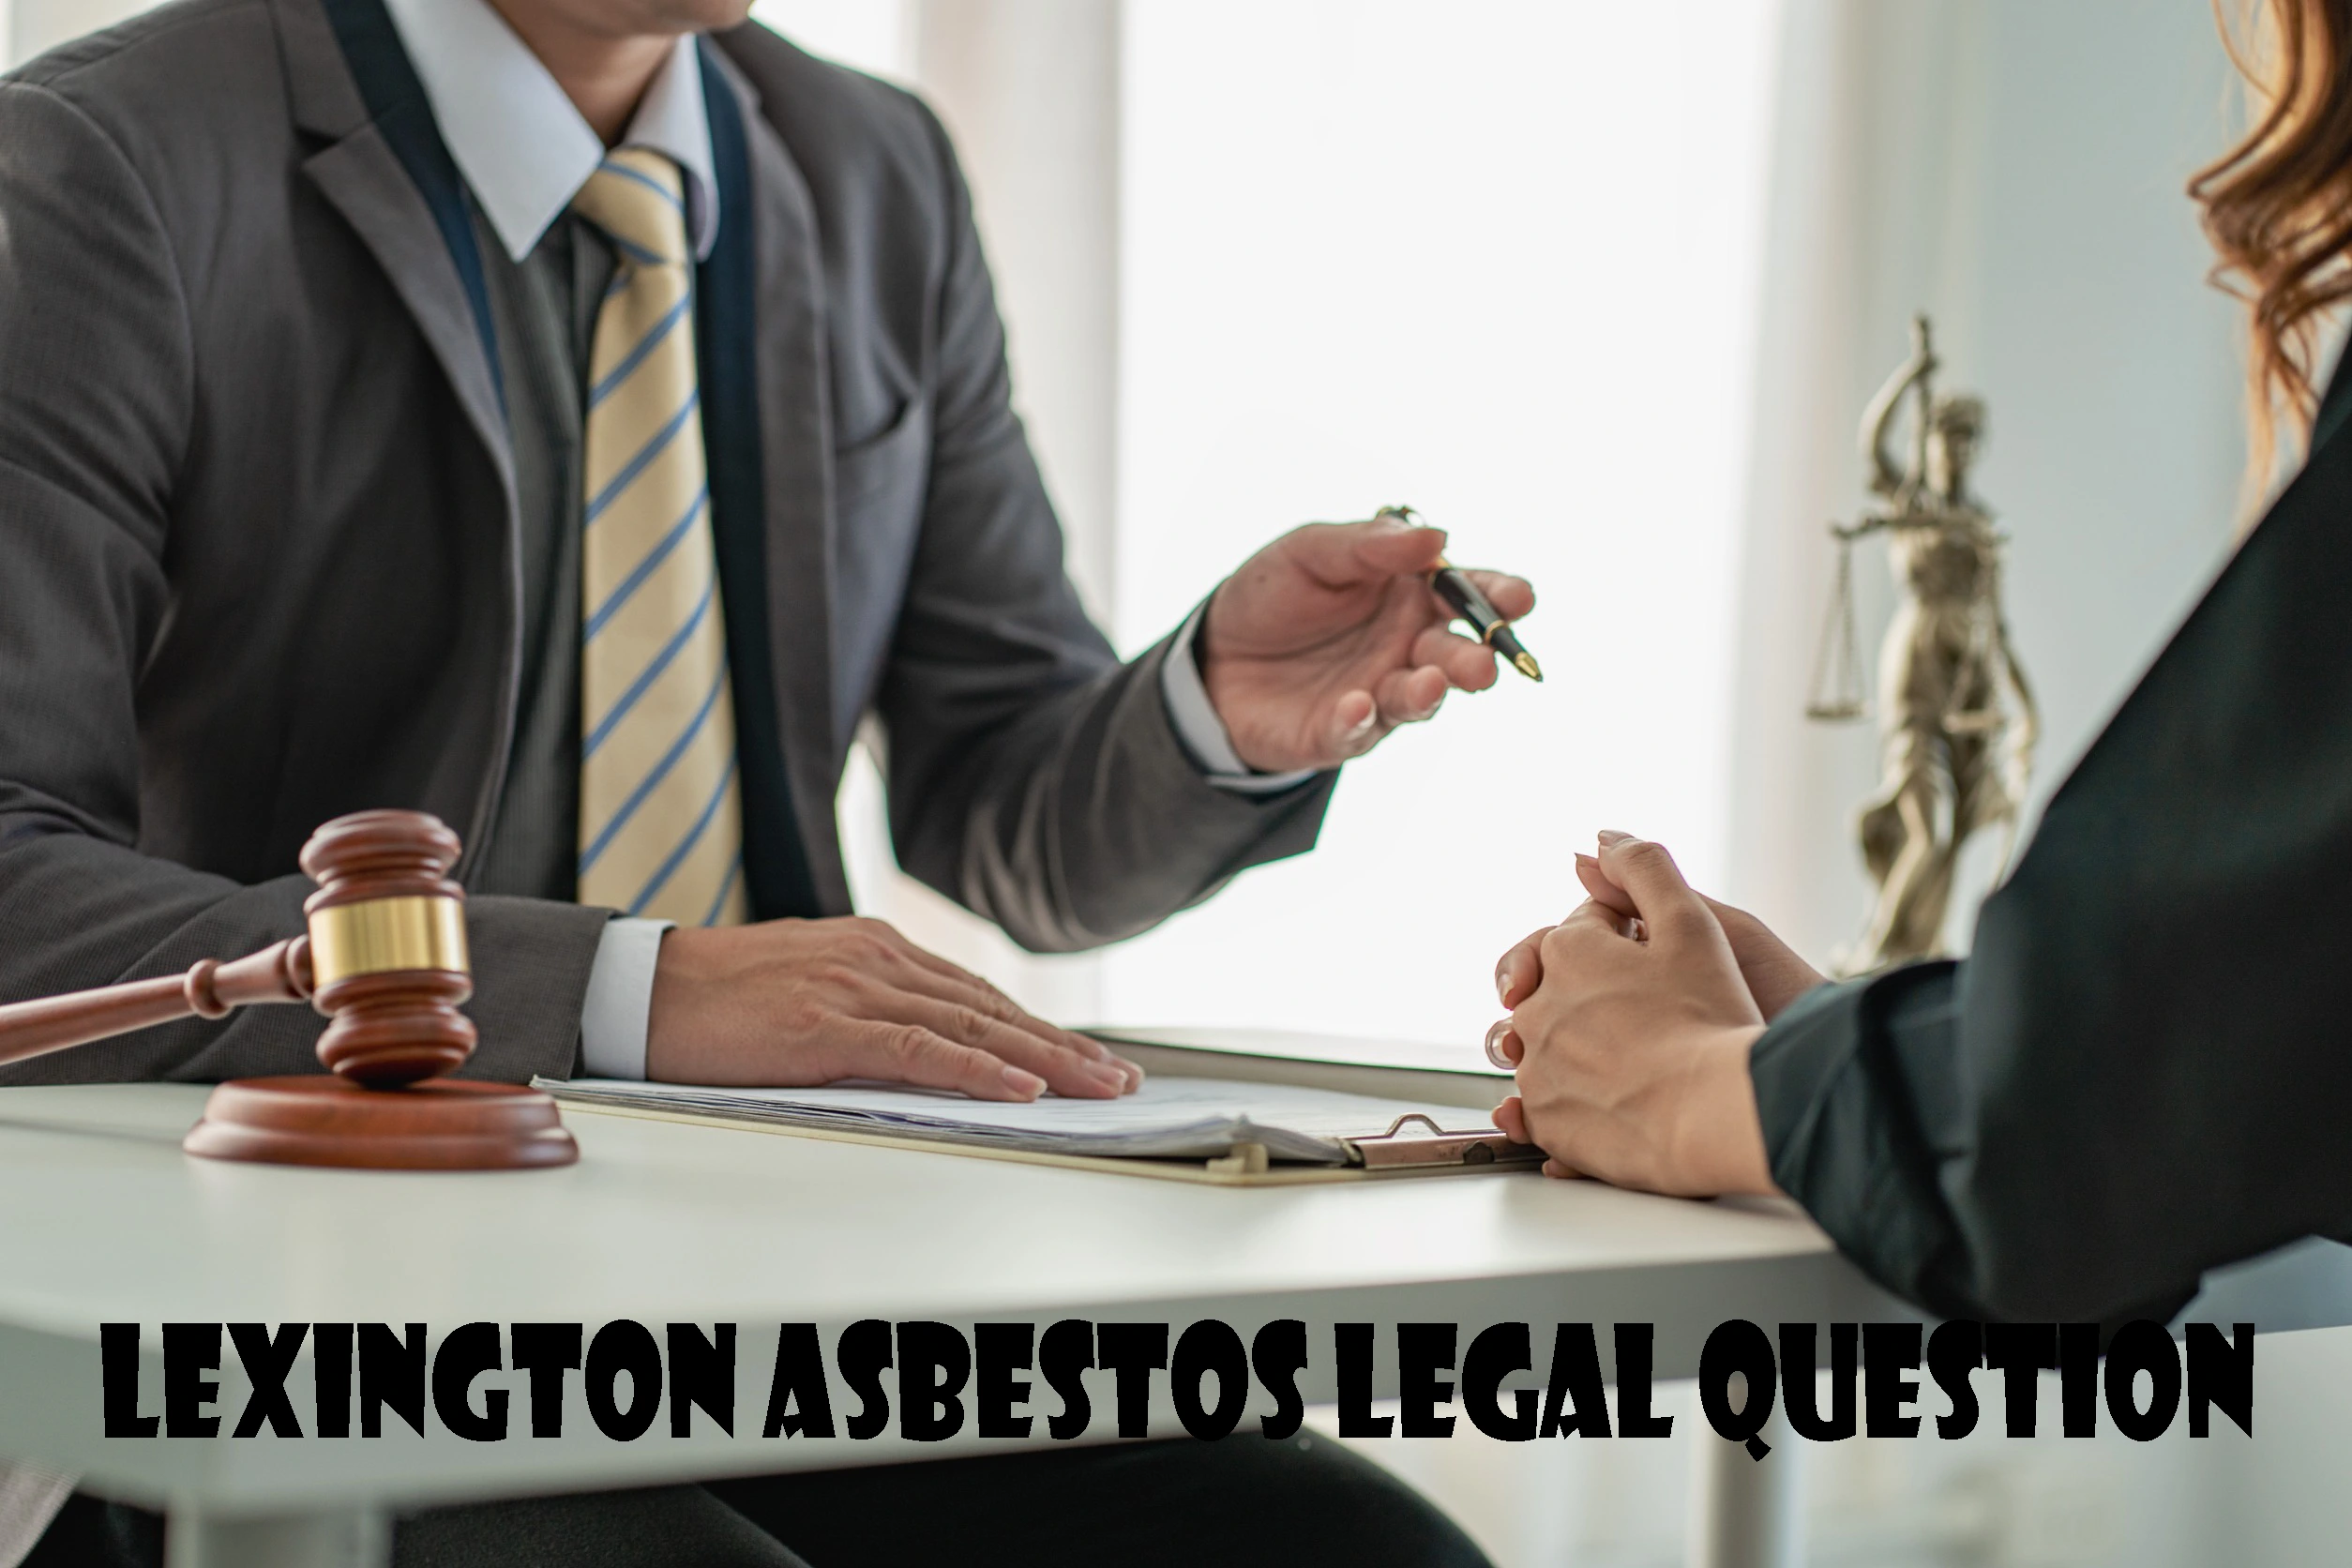 Lexington Asbestos Legal Question